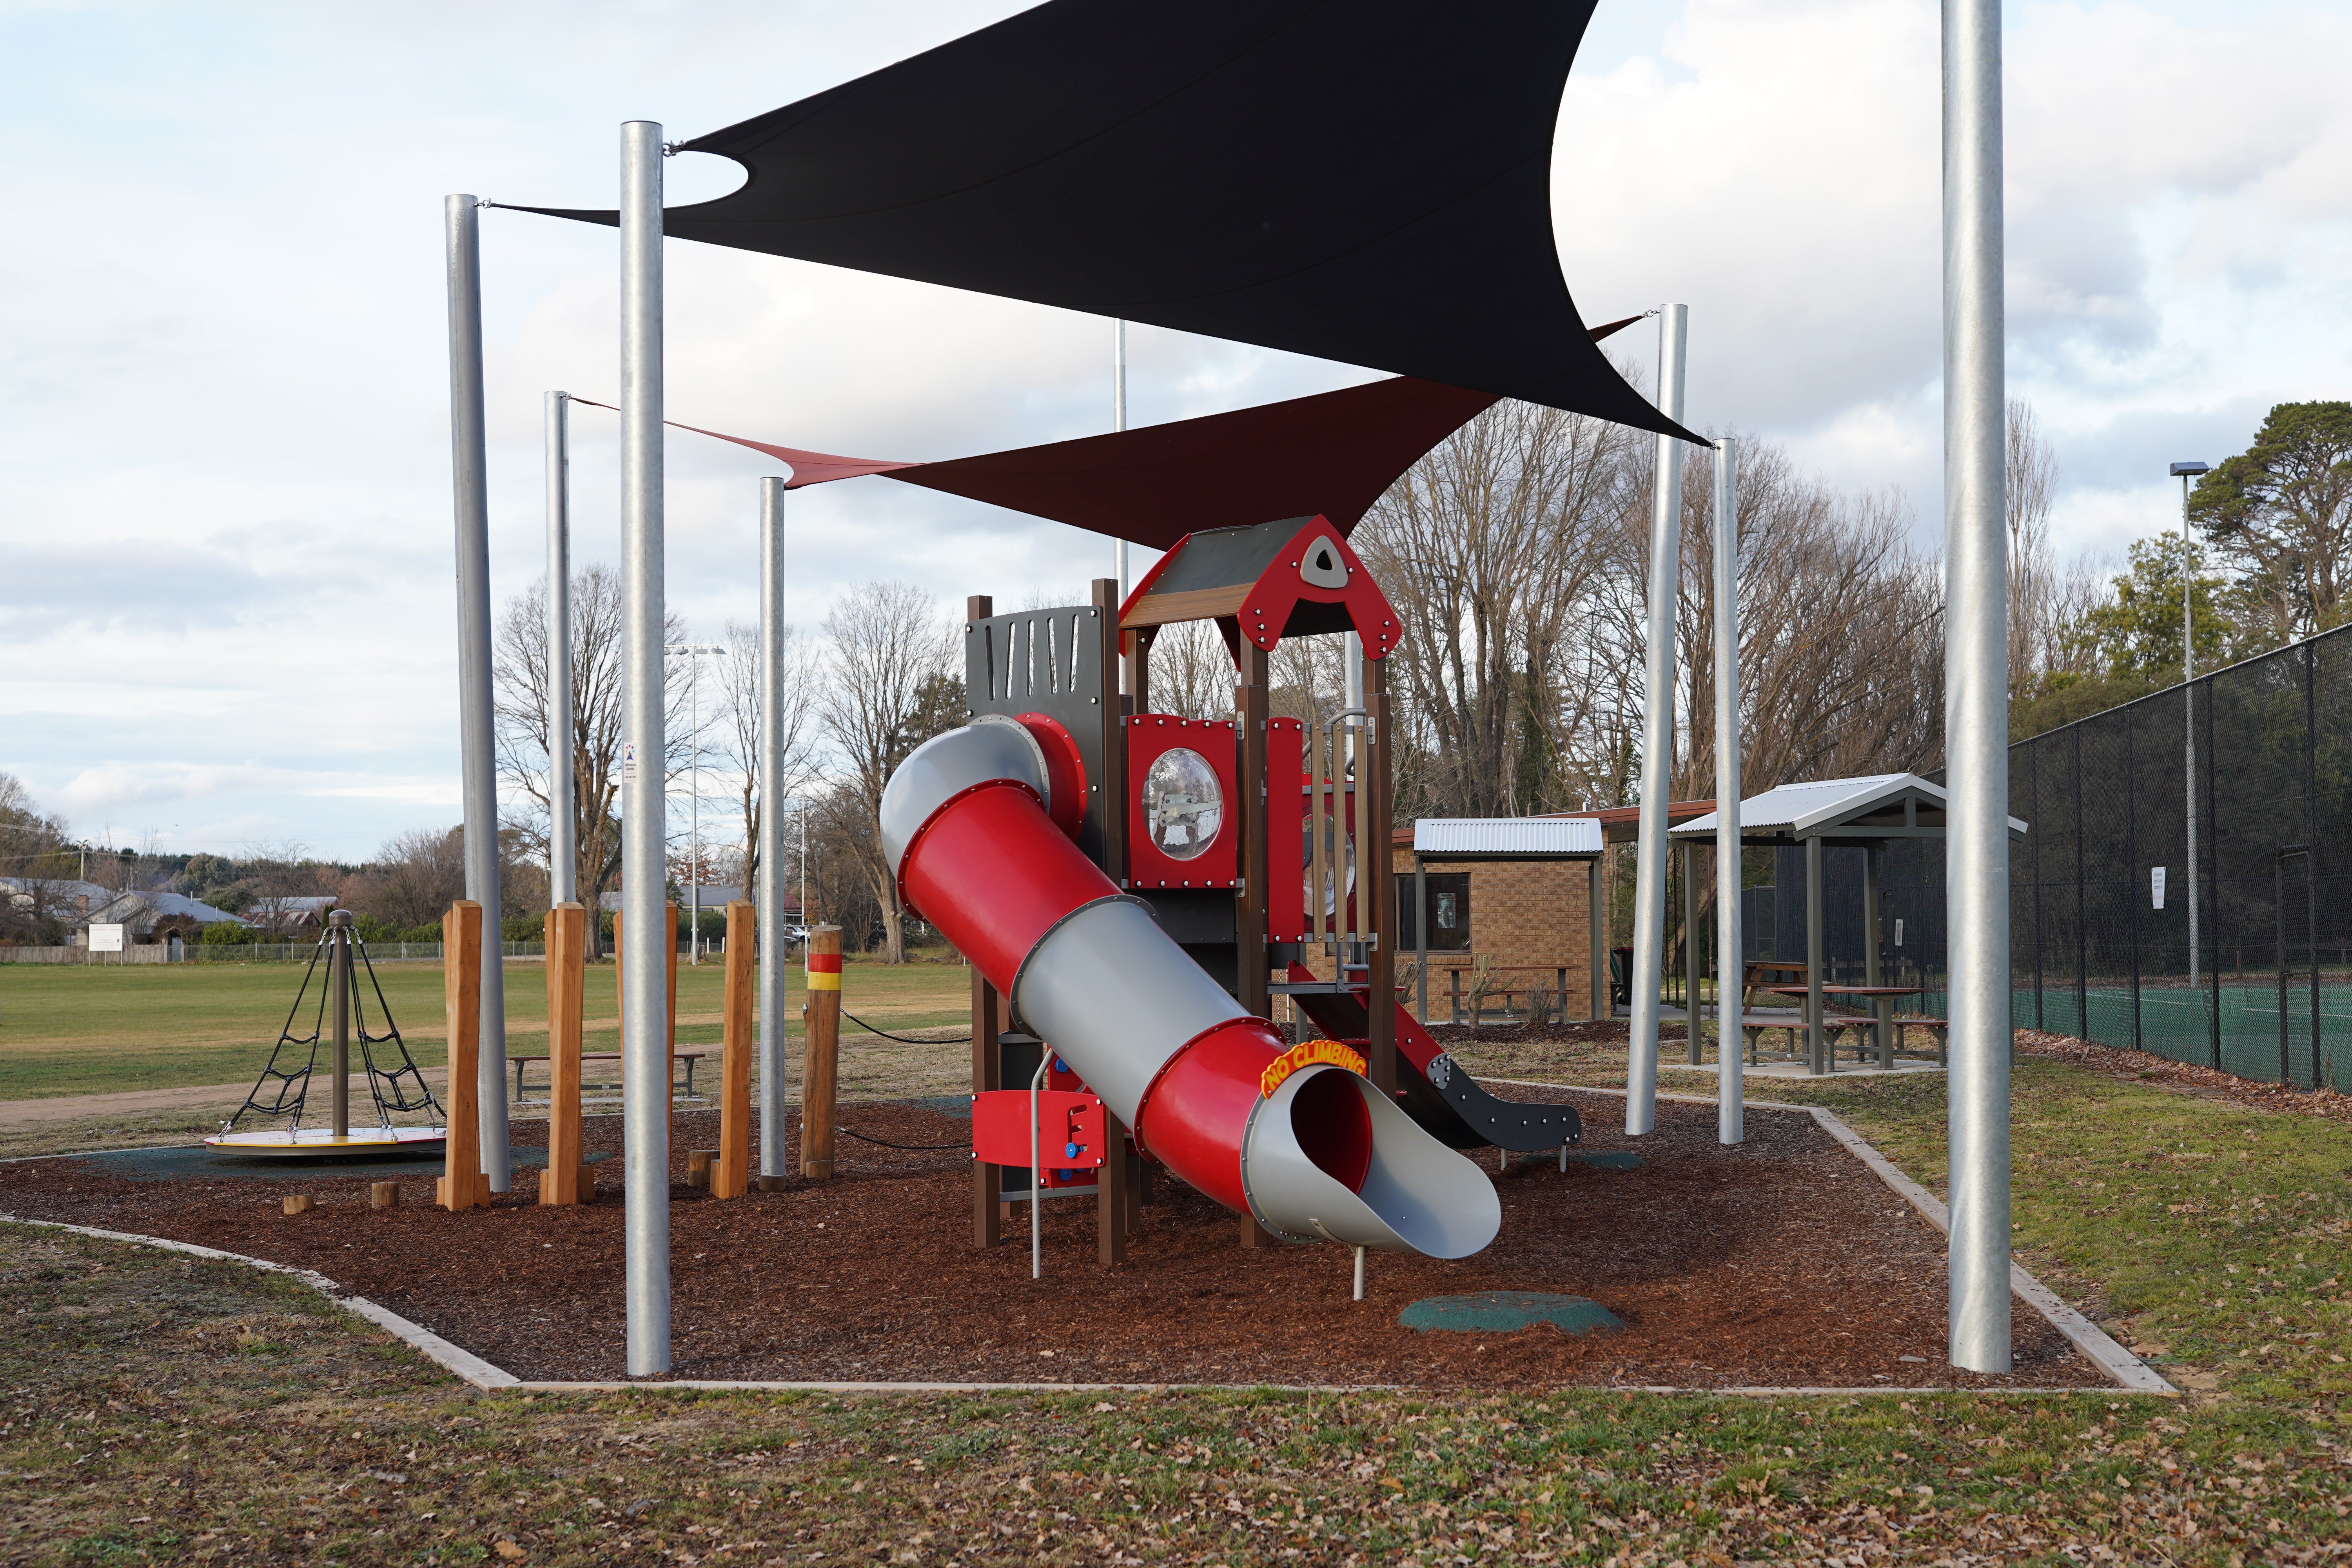 Braidwood Recreation Grounds and Playground - Carnarvon Accommodation